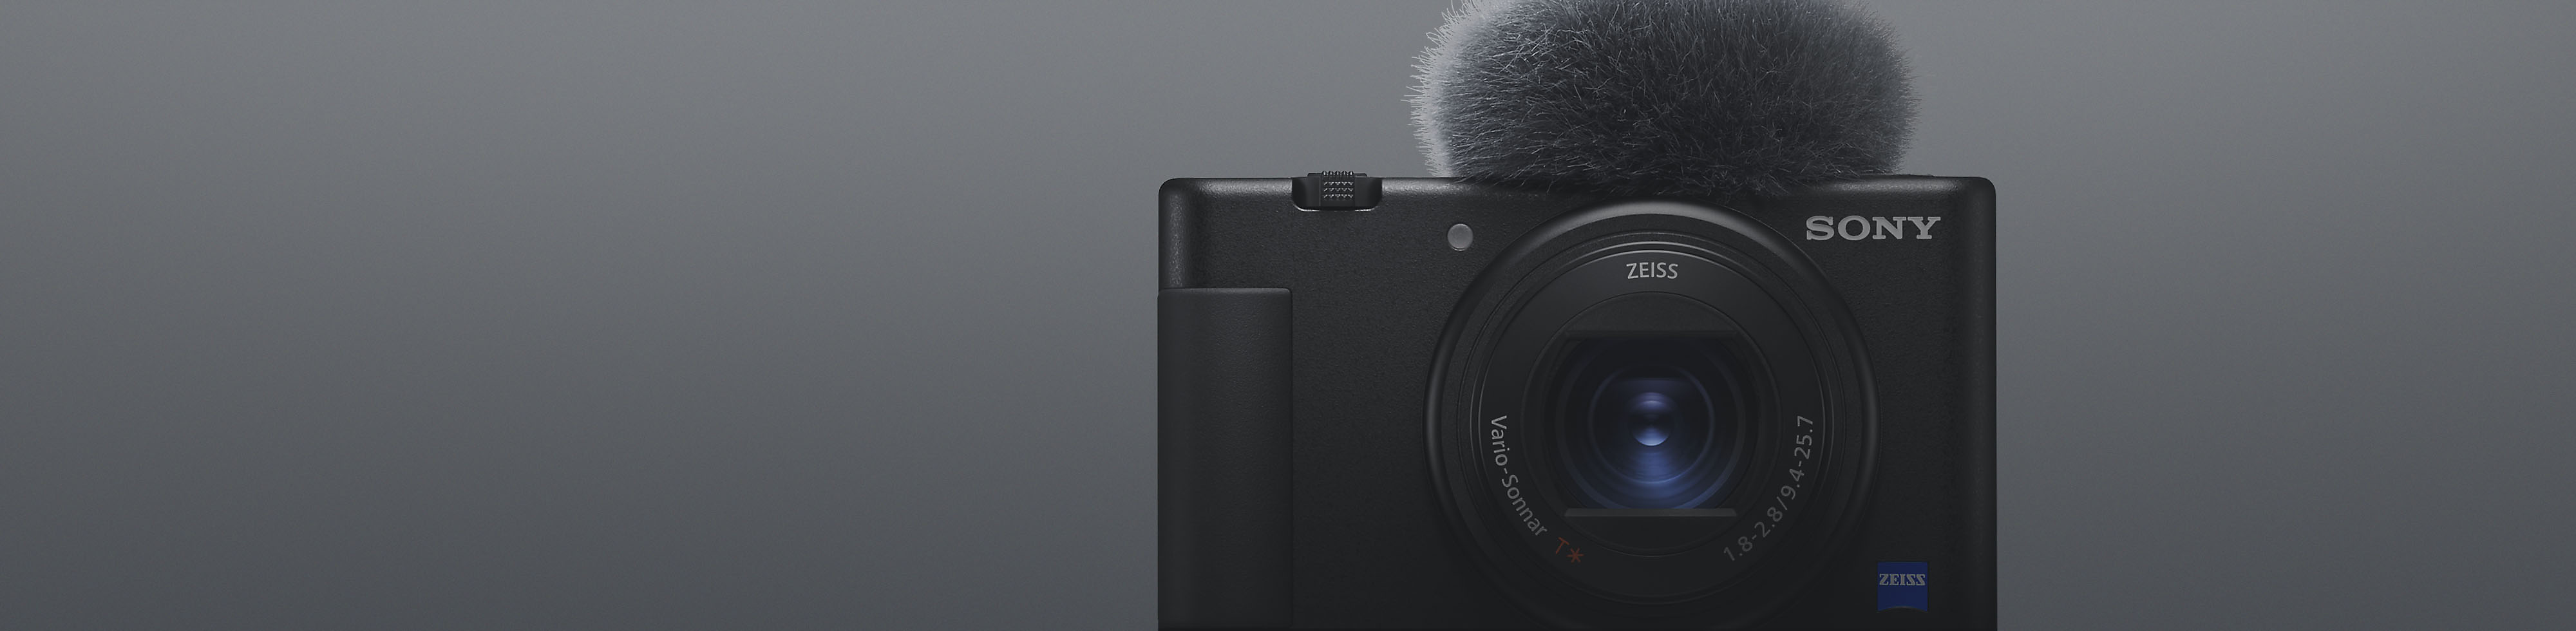 Tampak depan compact camera Sony warna hitam dengan mikrofon terpasang